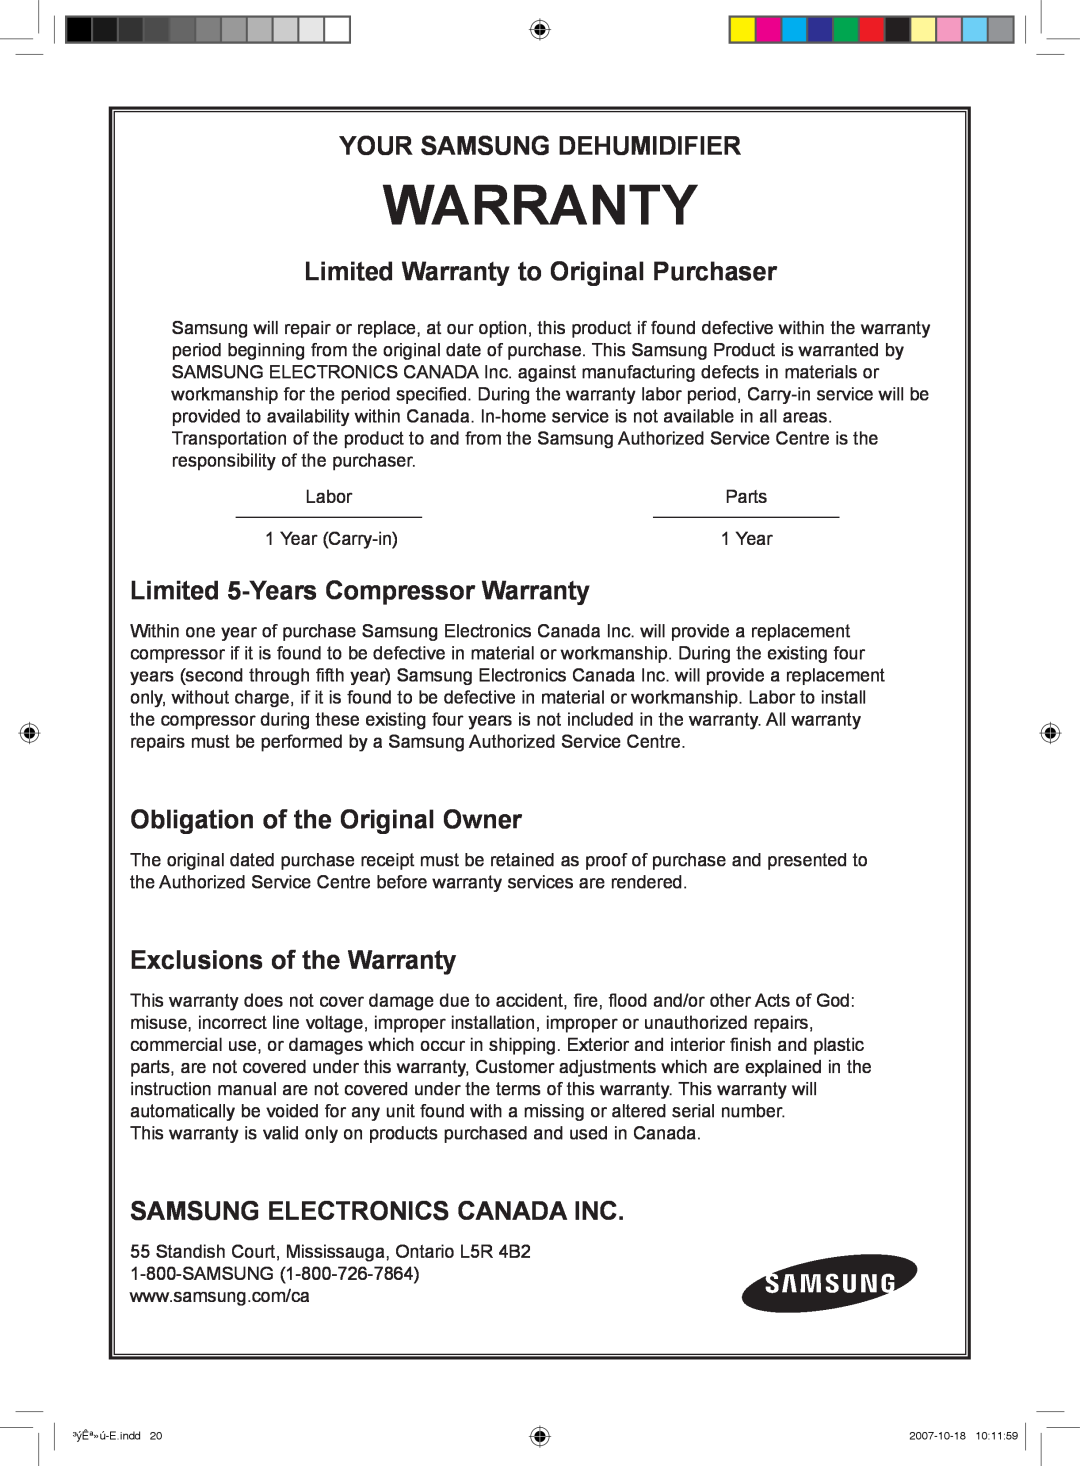 Samsung DED45EL8 Your Samsung Dehumidifier, Limited Warranty to Original Purchaser, Limited 5-YearsCompressor Warranty 